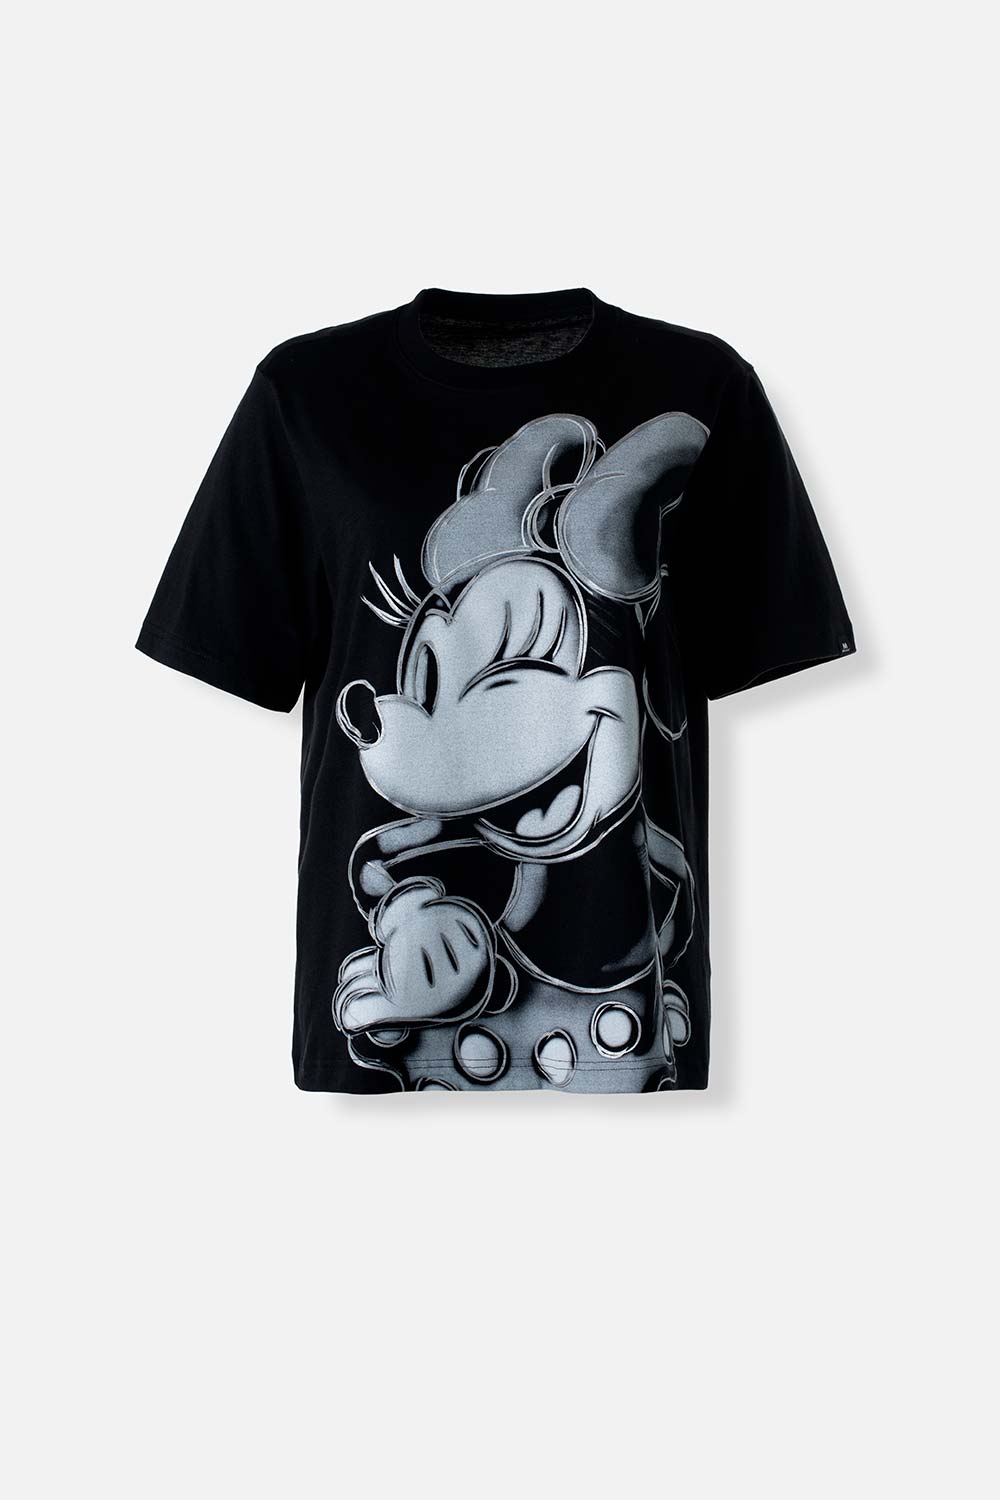 Camiseta de Minnie Mouse negra manga corta para mujer XS-0